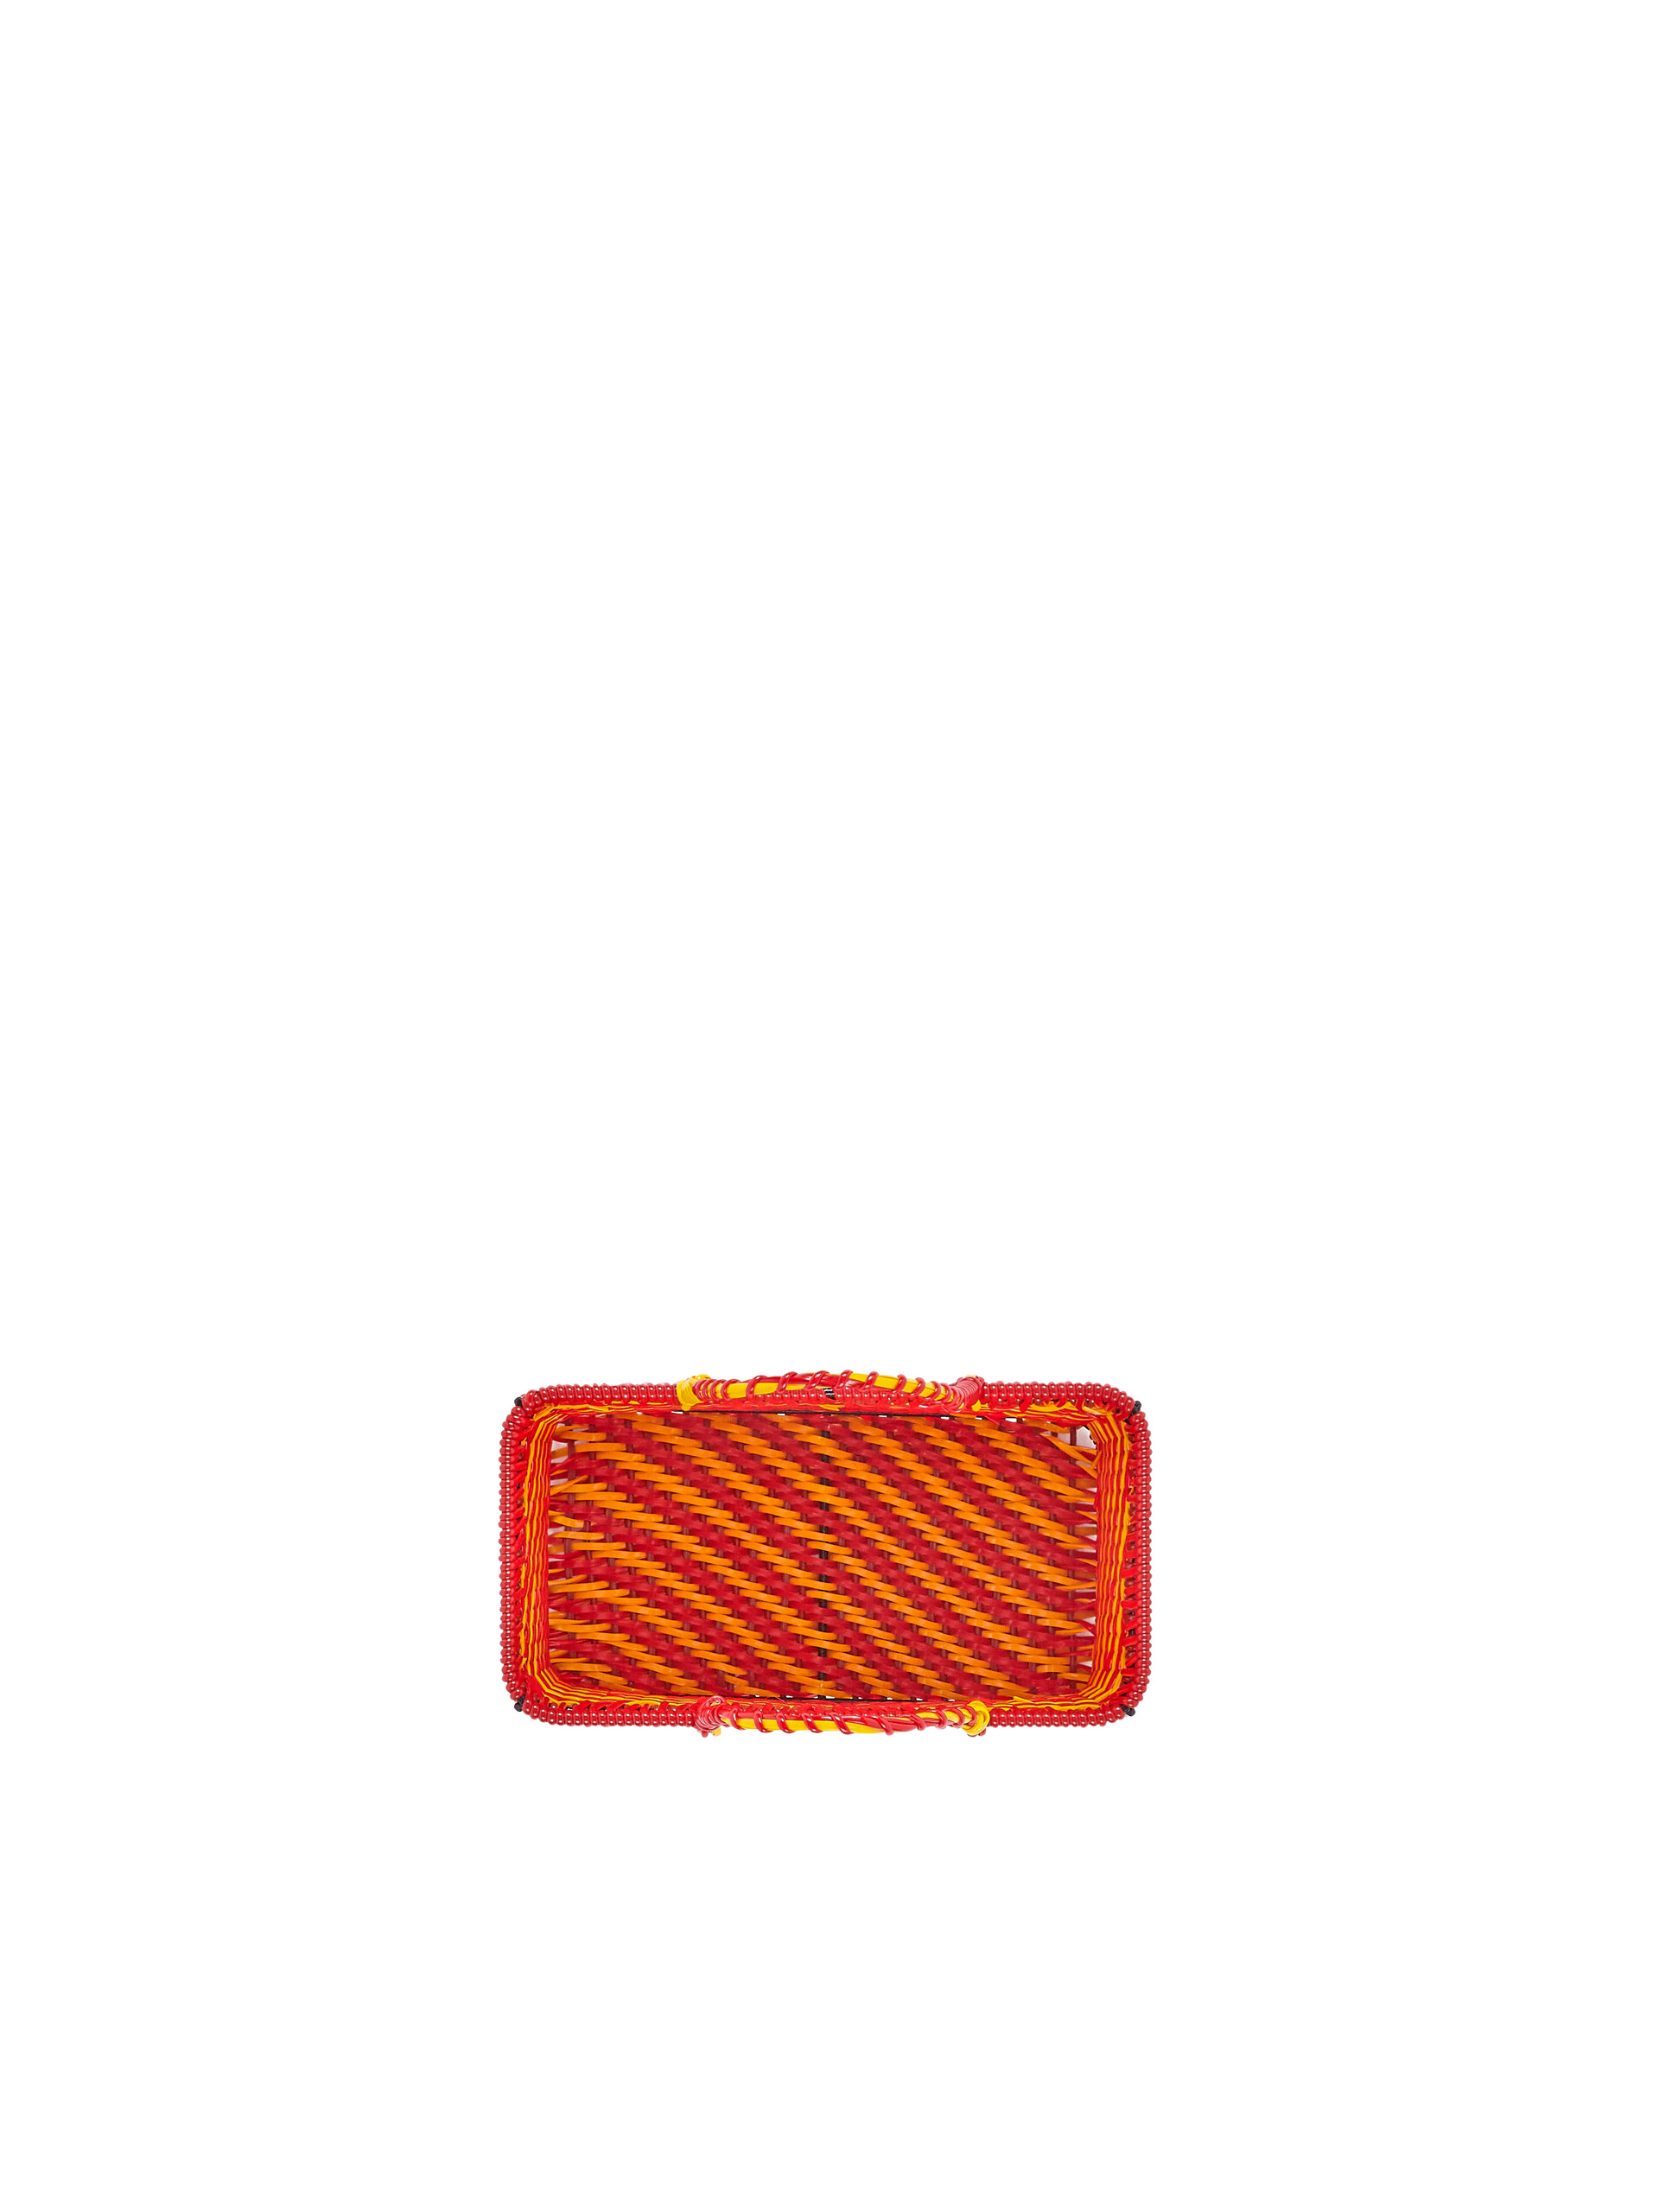 MARNI MARKET orange and red basket - Accessories - Image 4